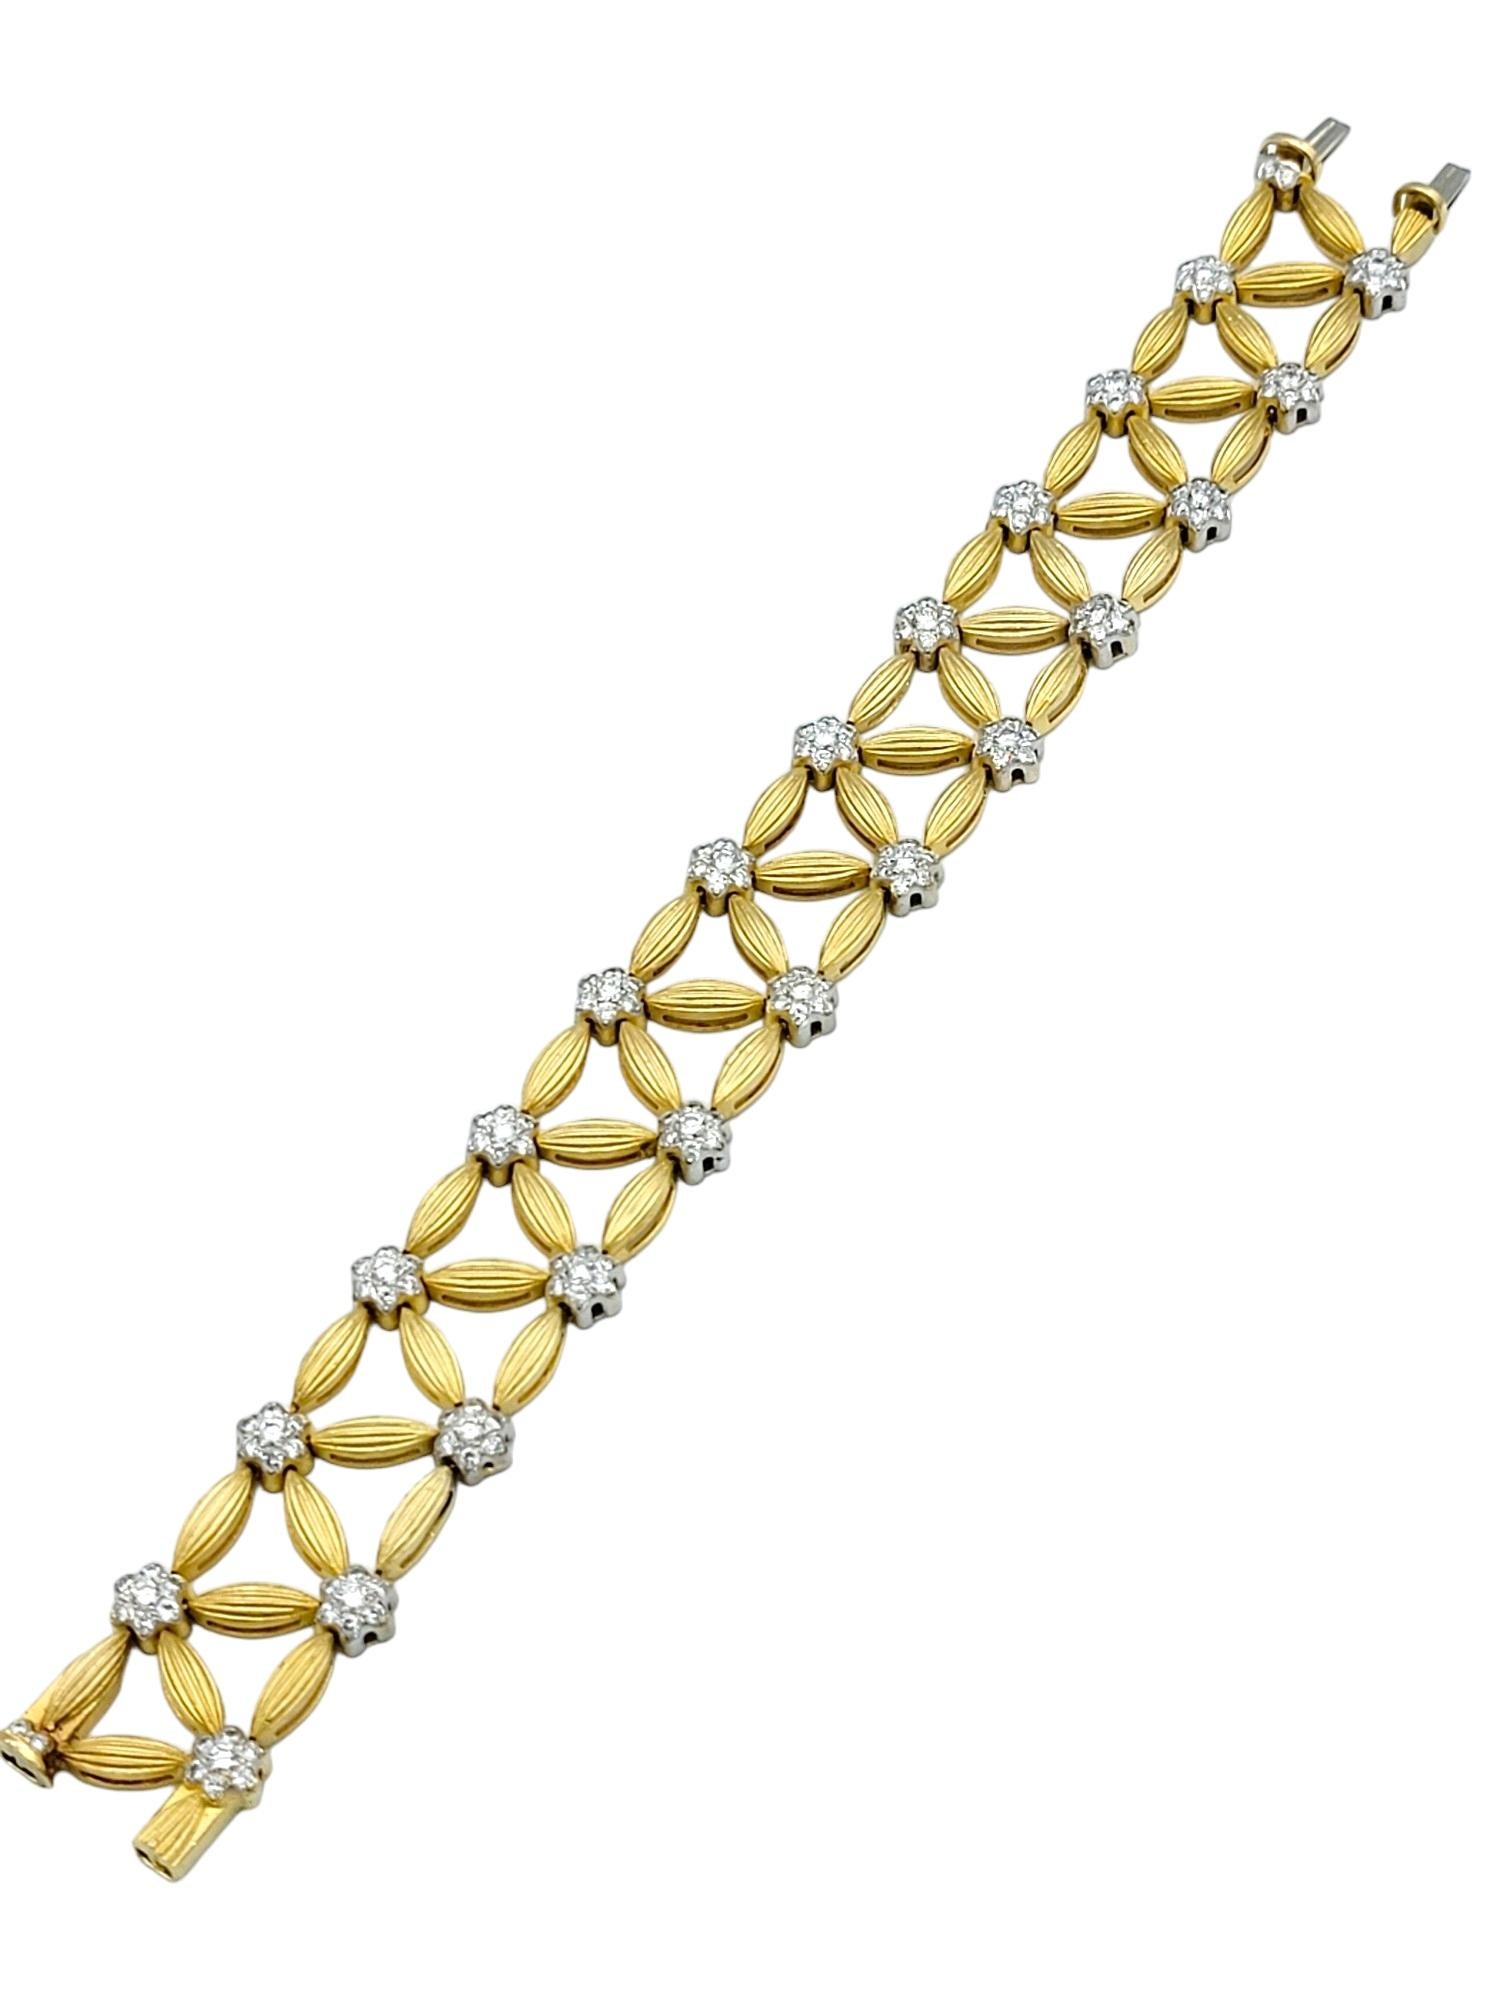 Round Cut Flower and Leaf Motif Diamond Open Link Bracelet Set in 18 Karat Yellow Gold For Sale